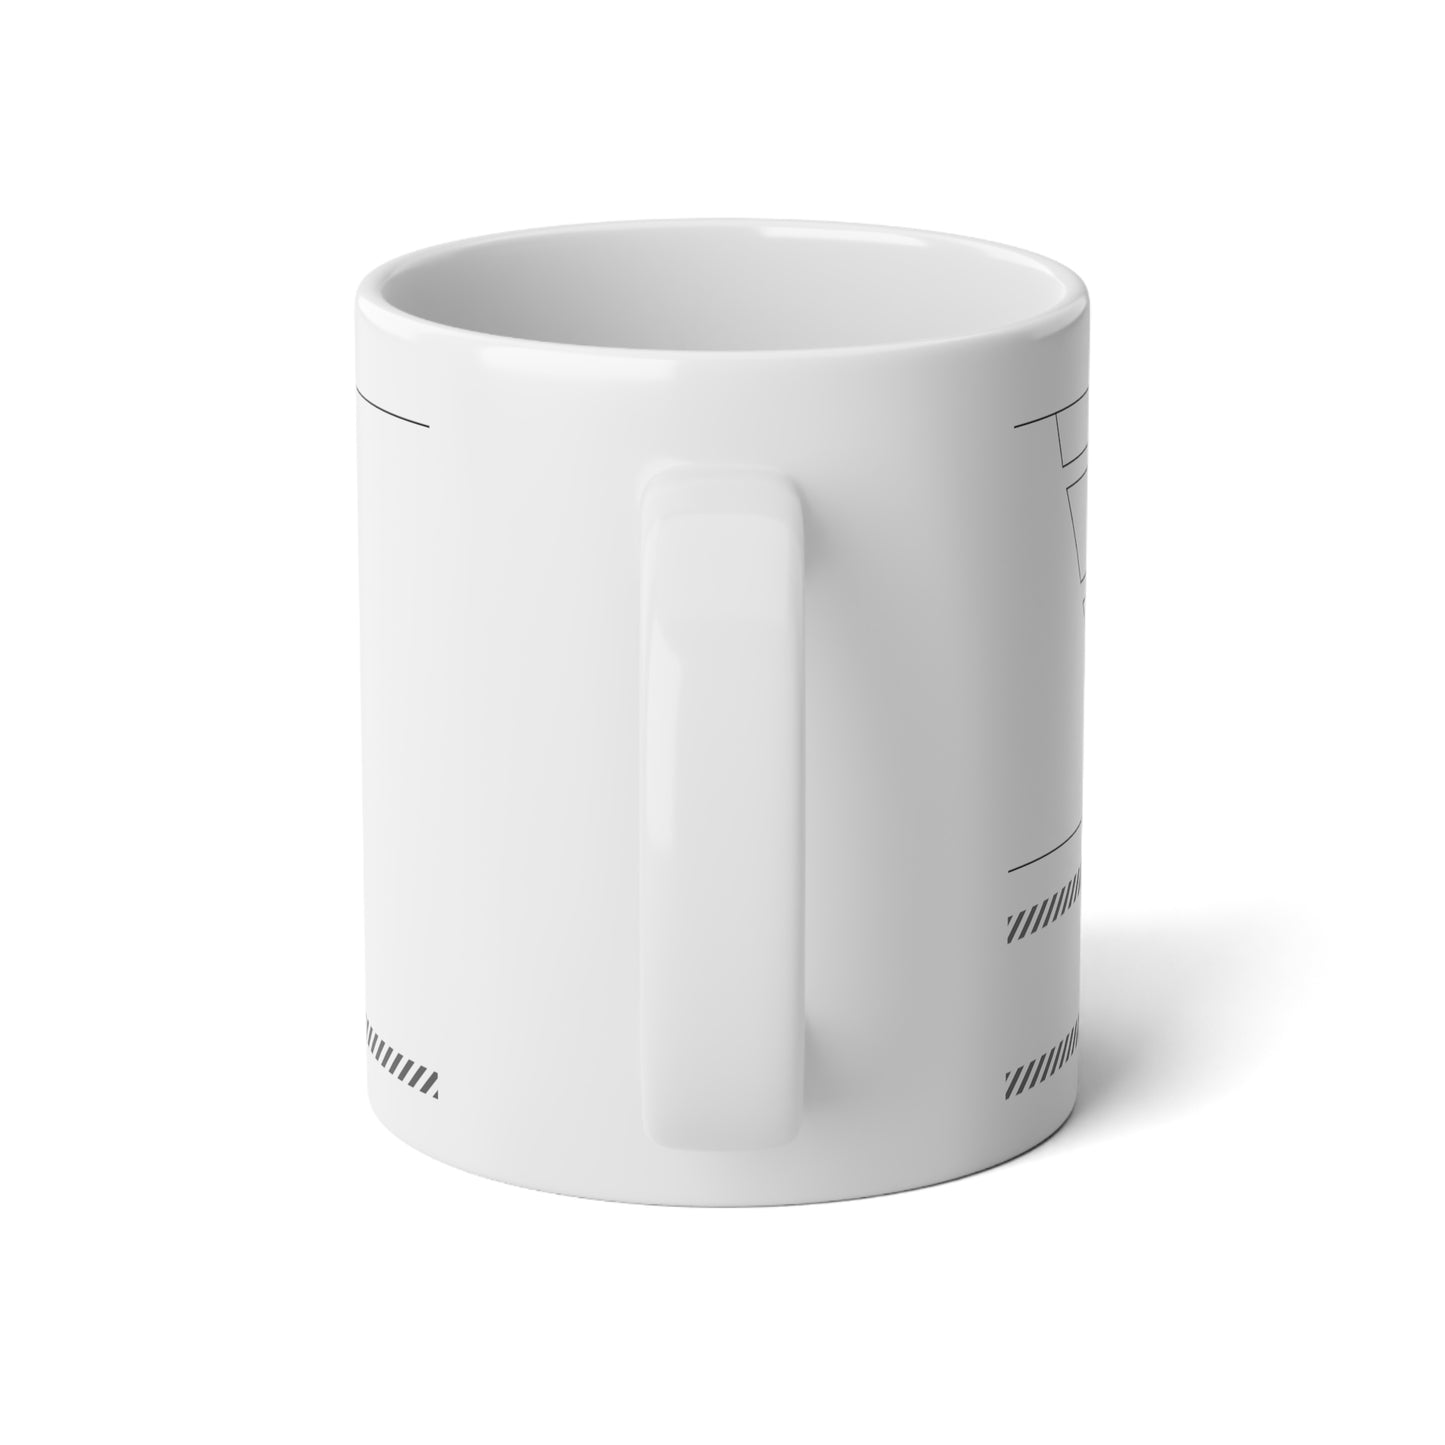 Warsaken® Mug : 20oz : White